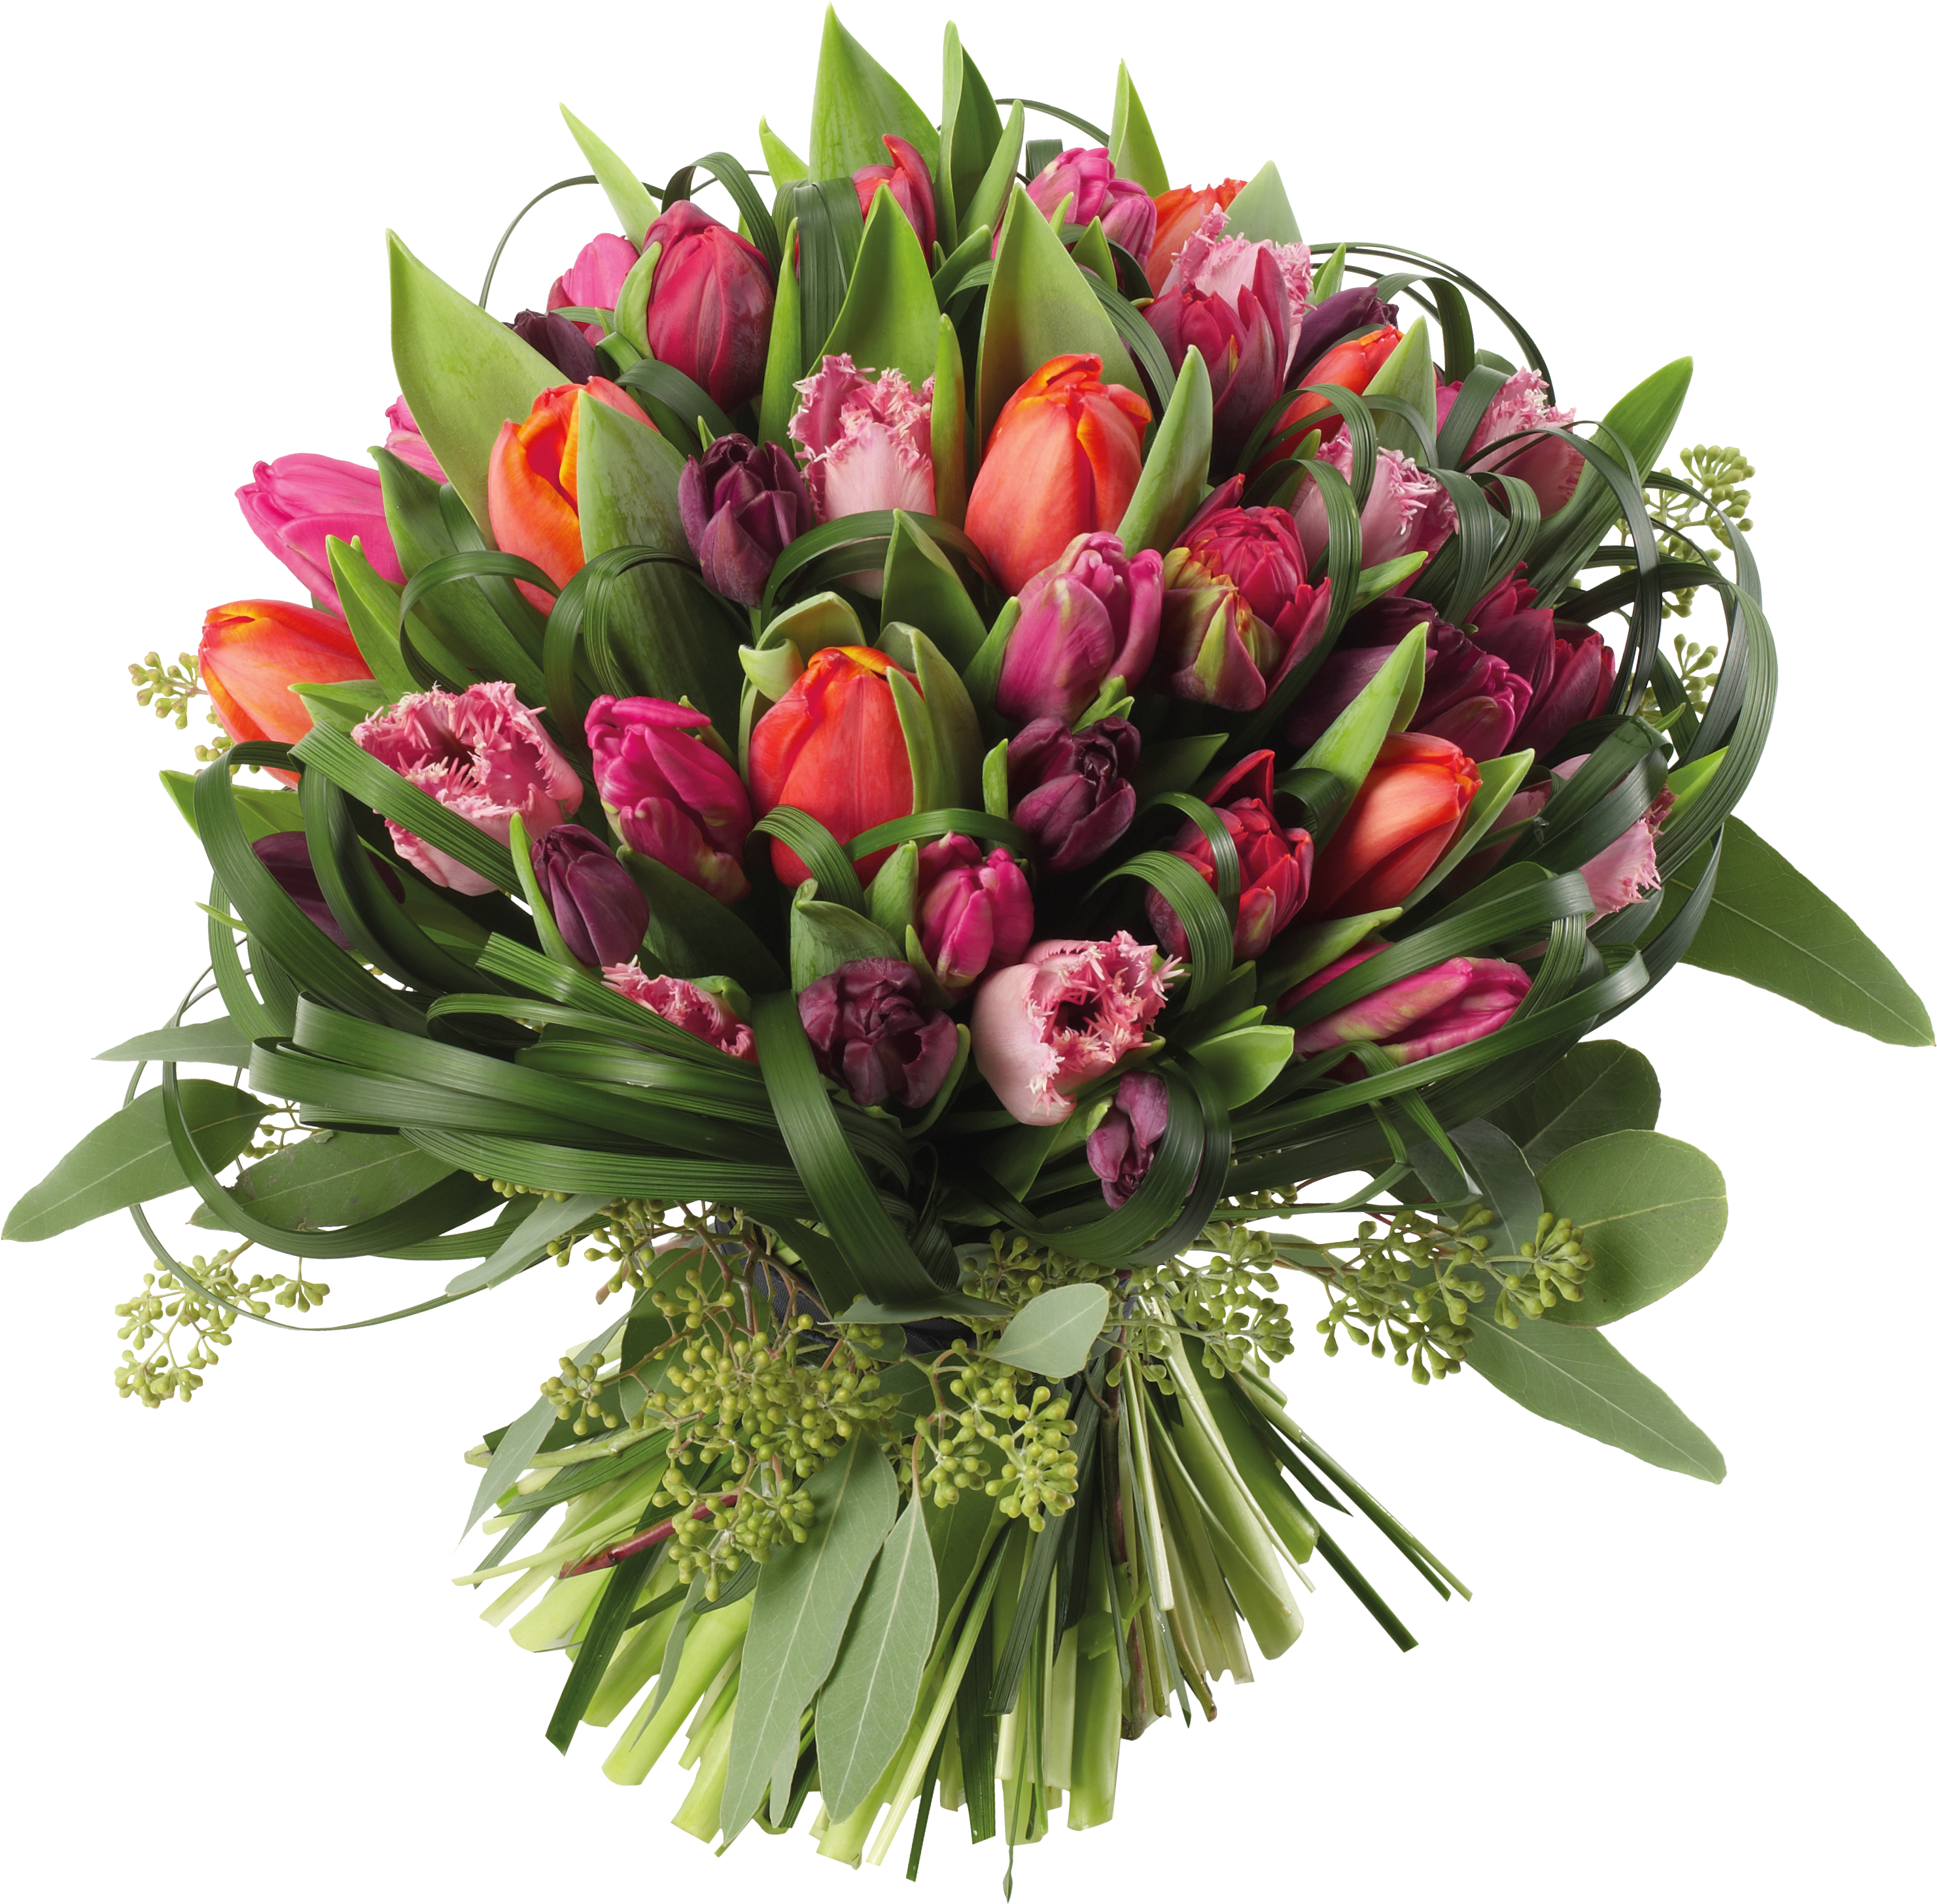 Free Tulip Bouquet Cliparts, Download Free Tulip Bouquet Cliparts png ...